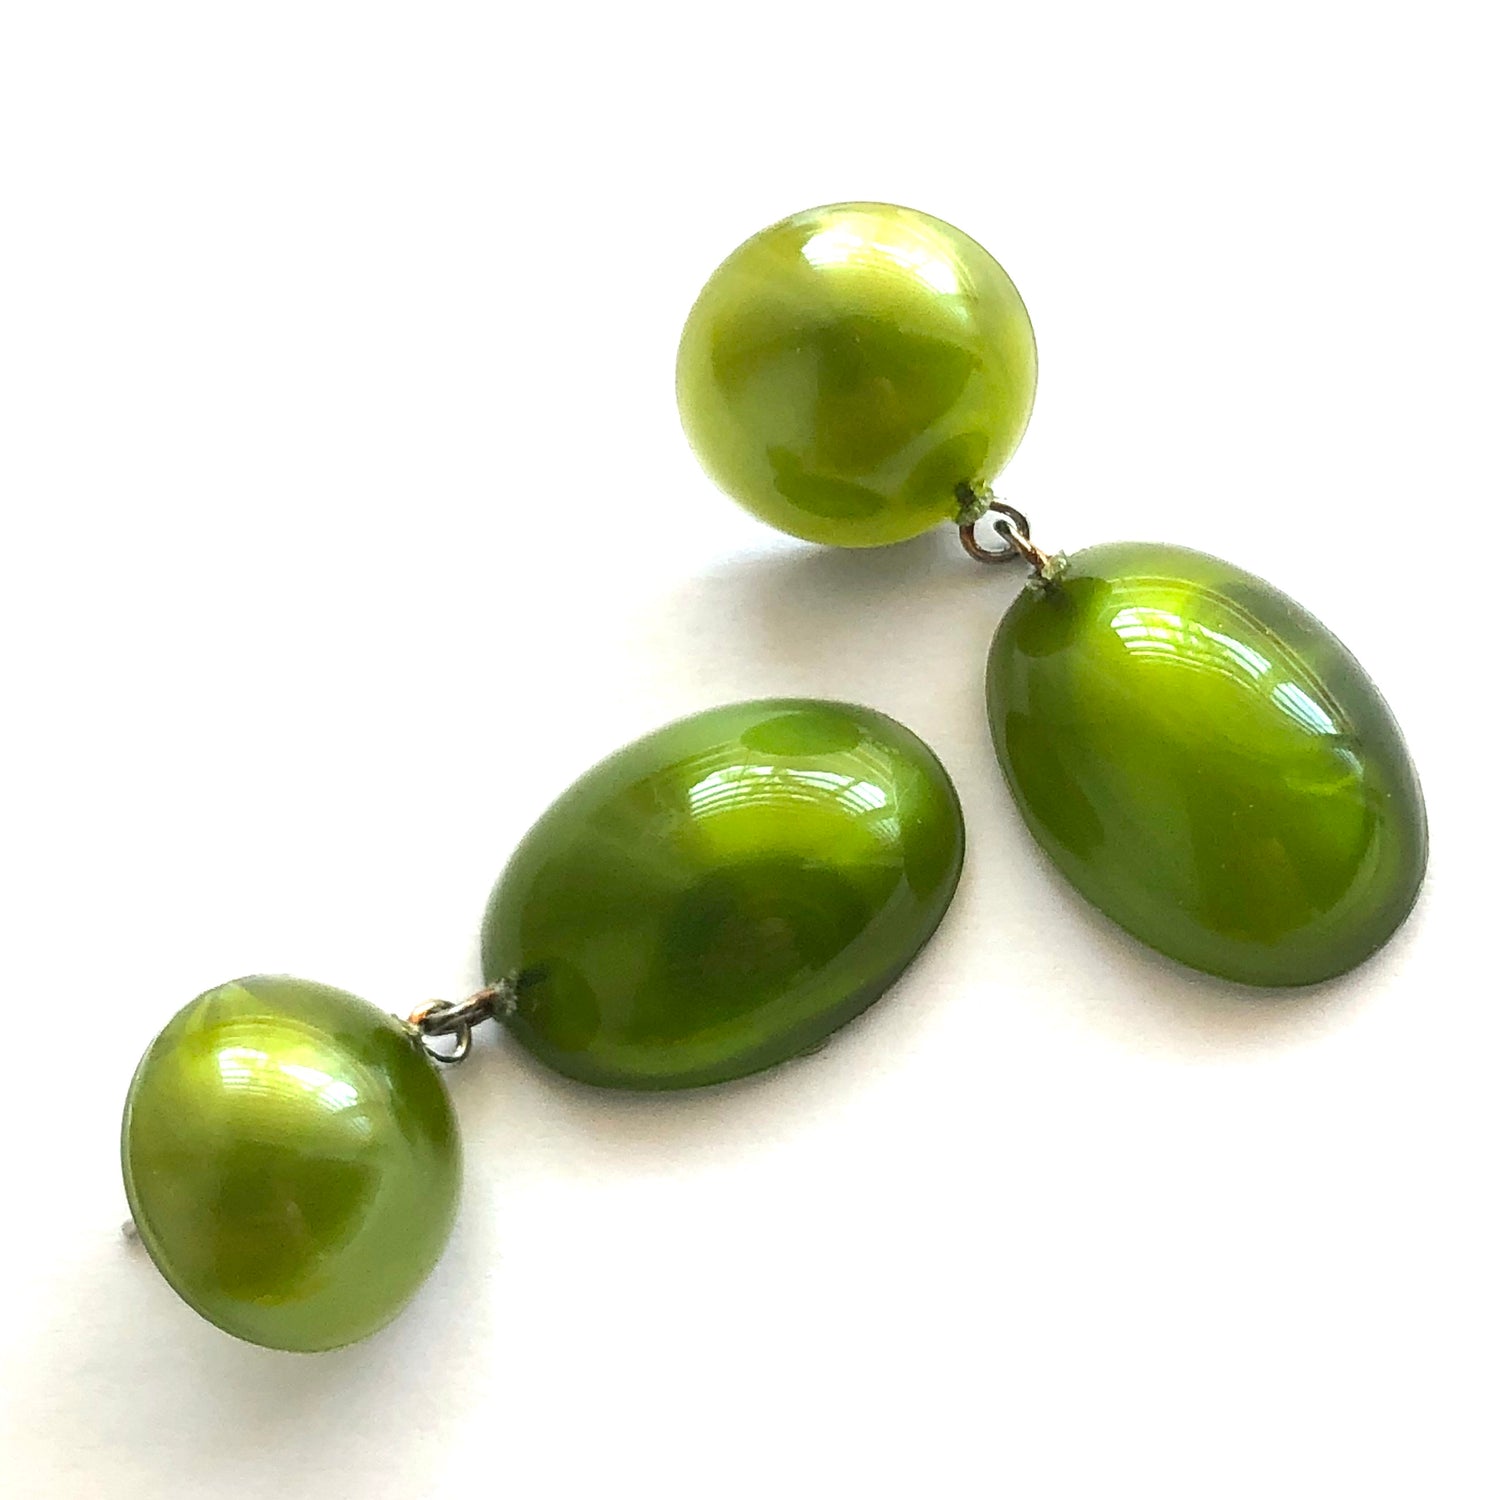 Olive Green Aura Glow Jelly Bean Earrings